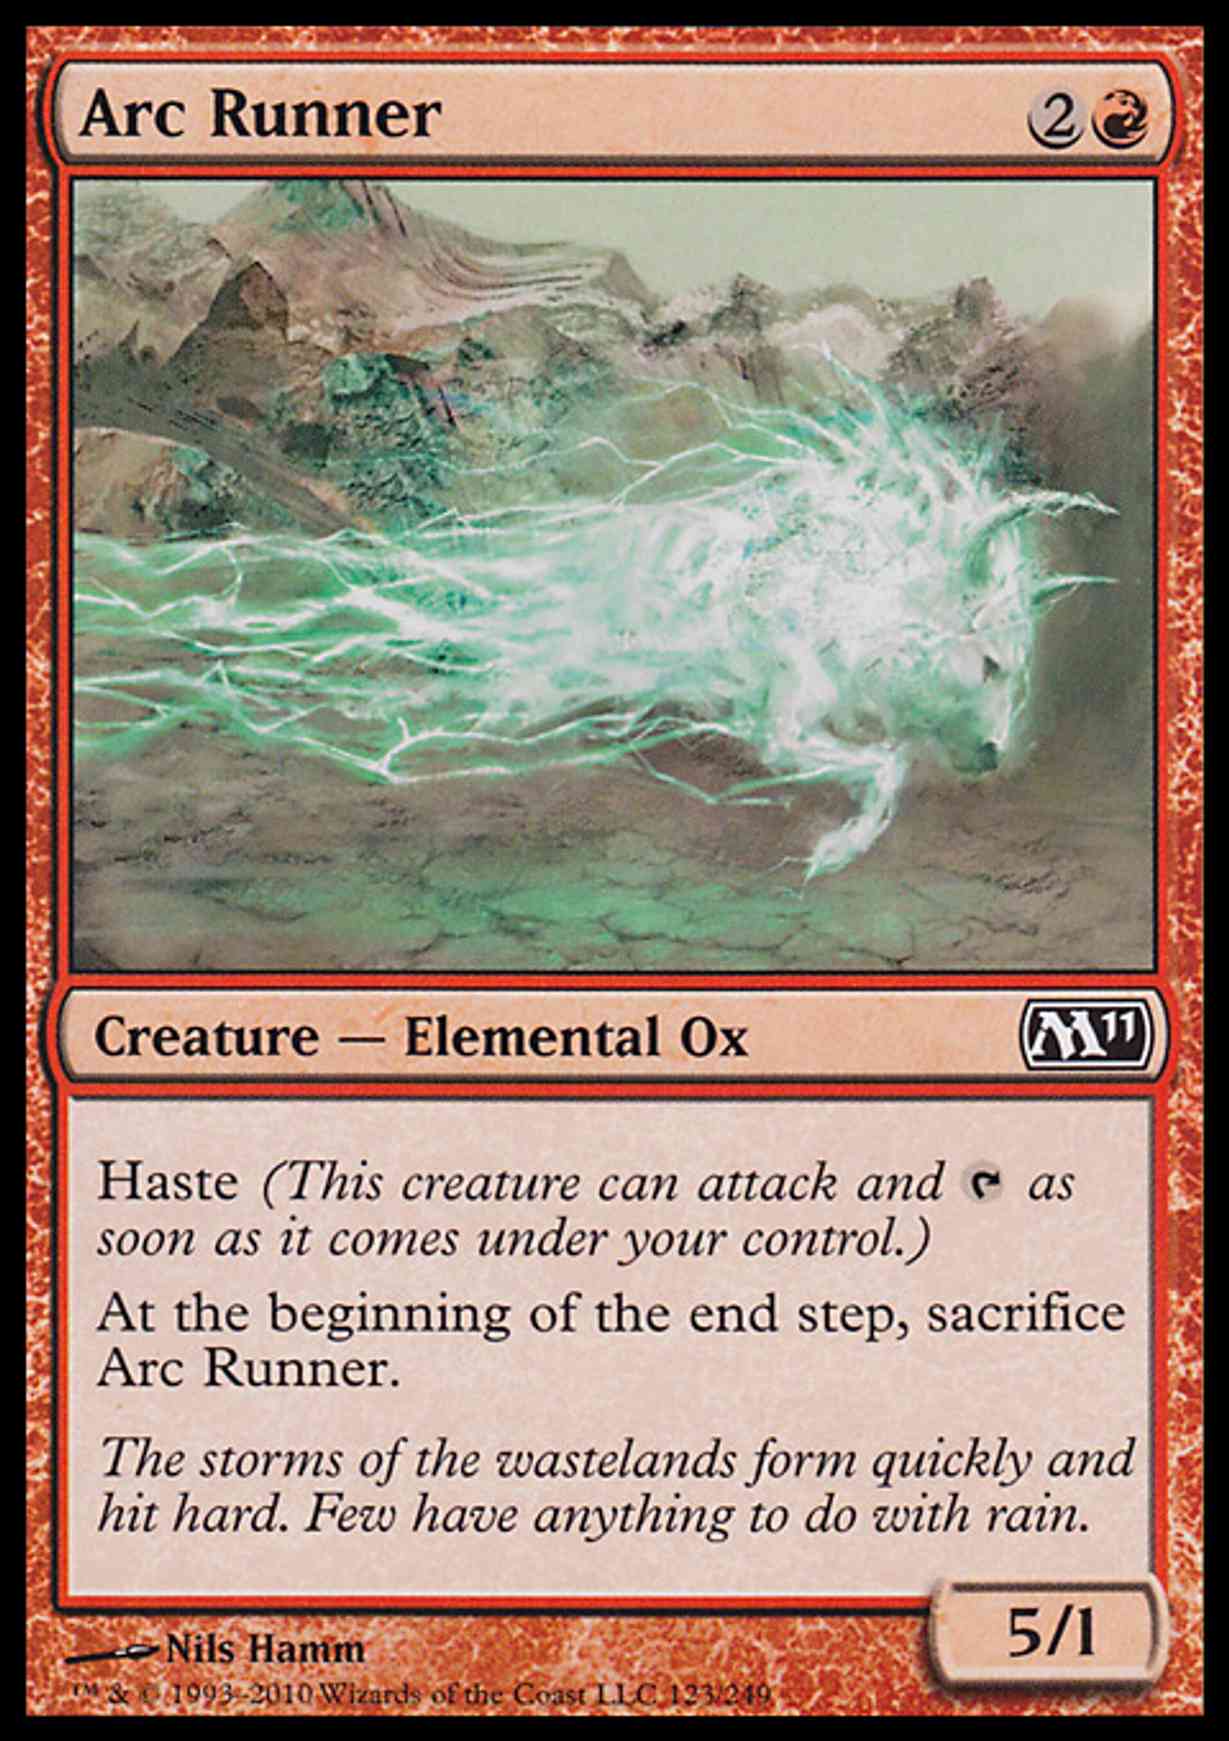 Arc Runner magic card front